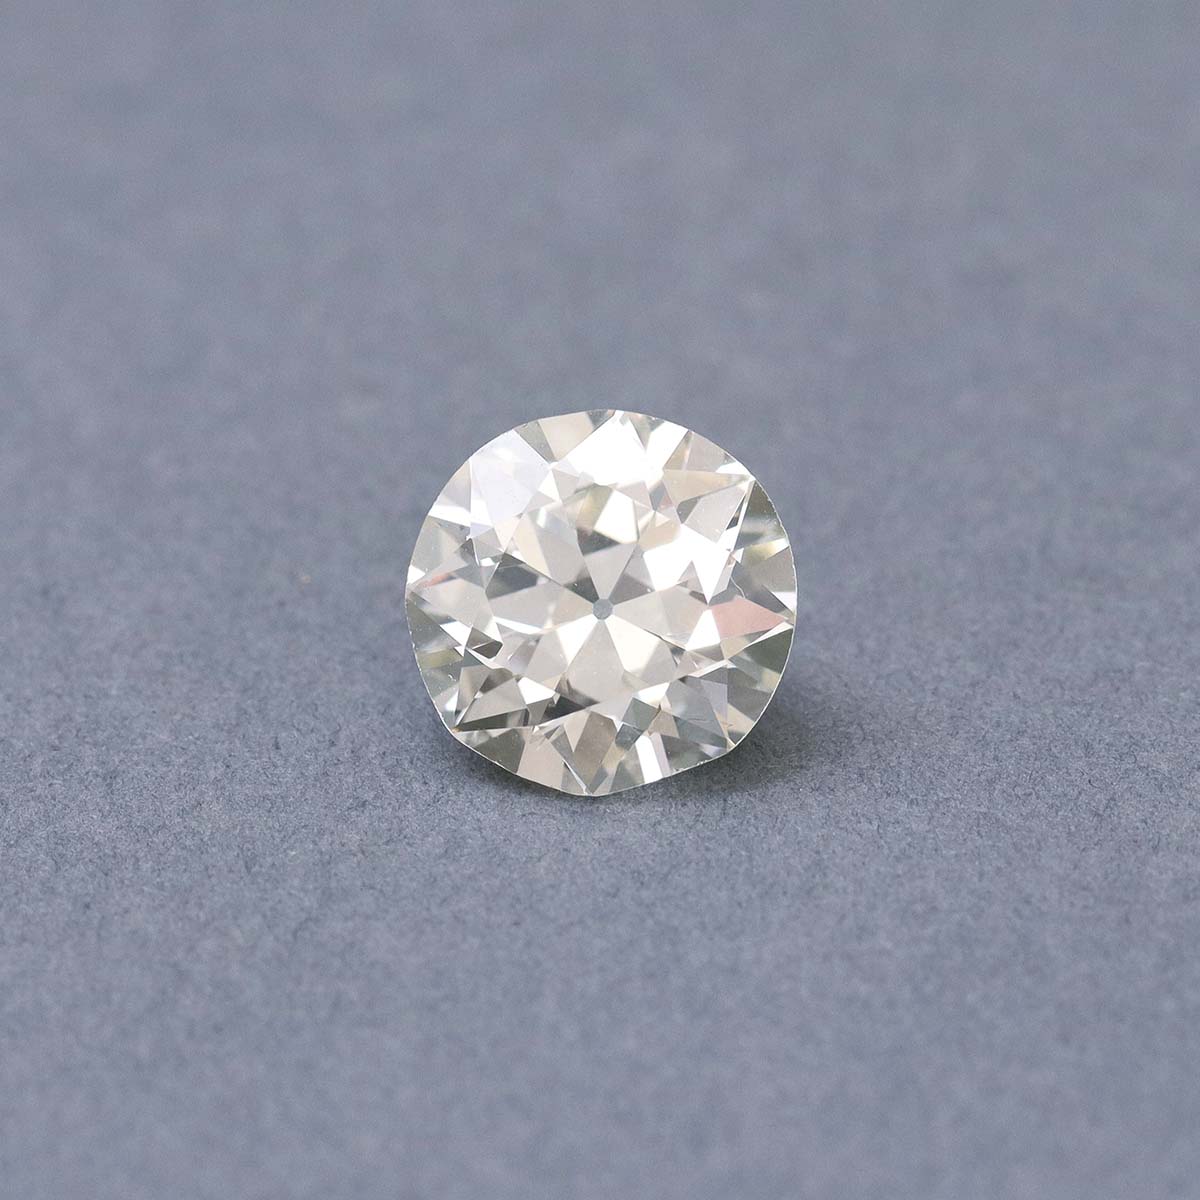 Old European Cut Diamond 2.94 carats K VS1 GIA #D230602-3